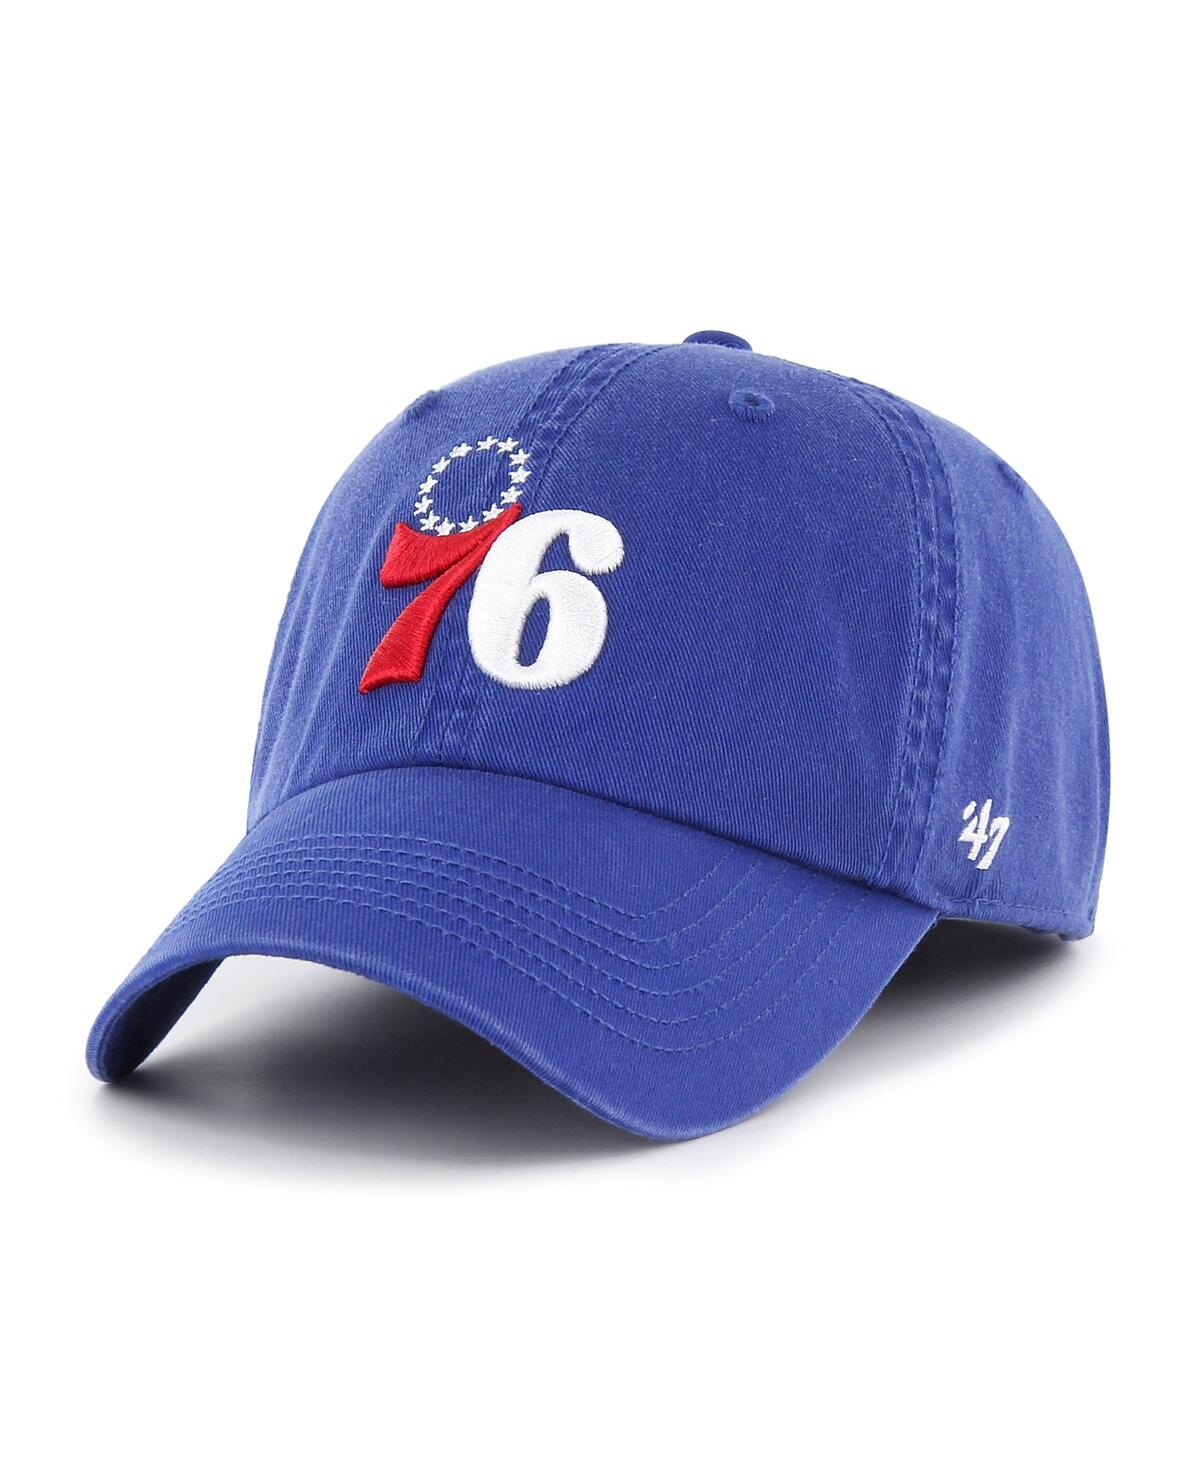 Men's '47 Brand Royal Philadelphia 76ers Classic Franchise Flex Hat - Royal